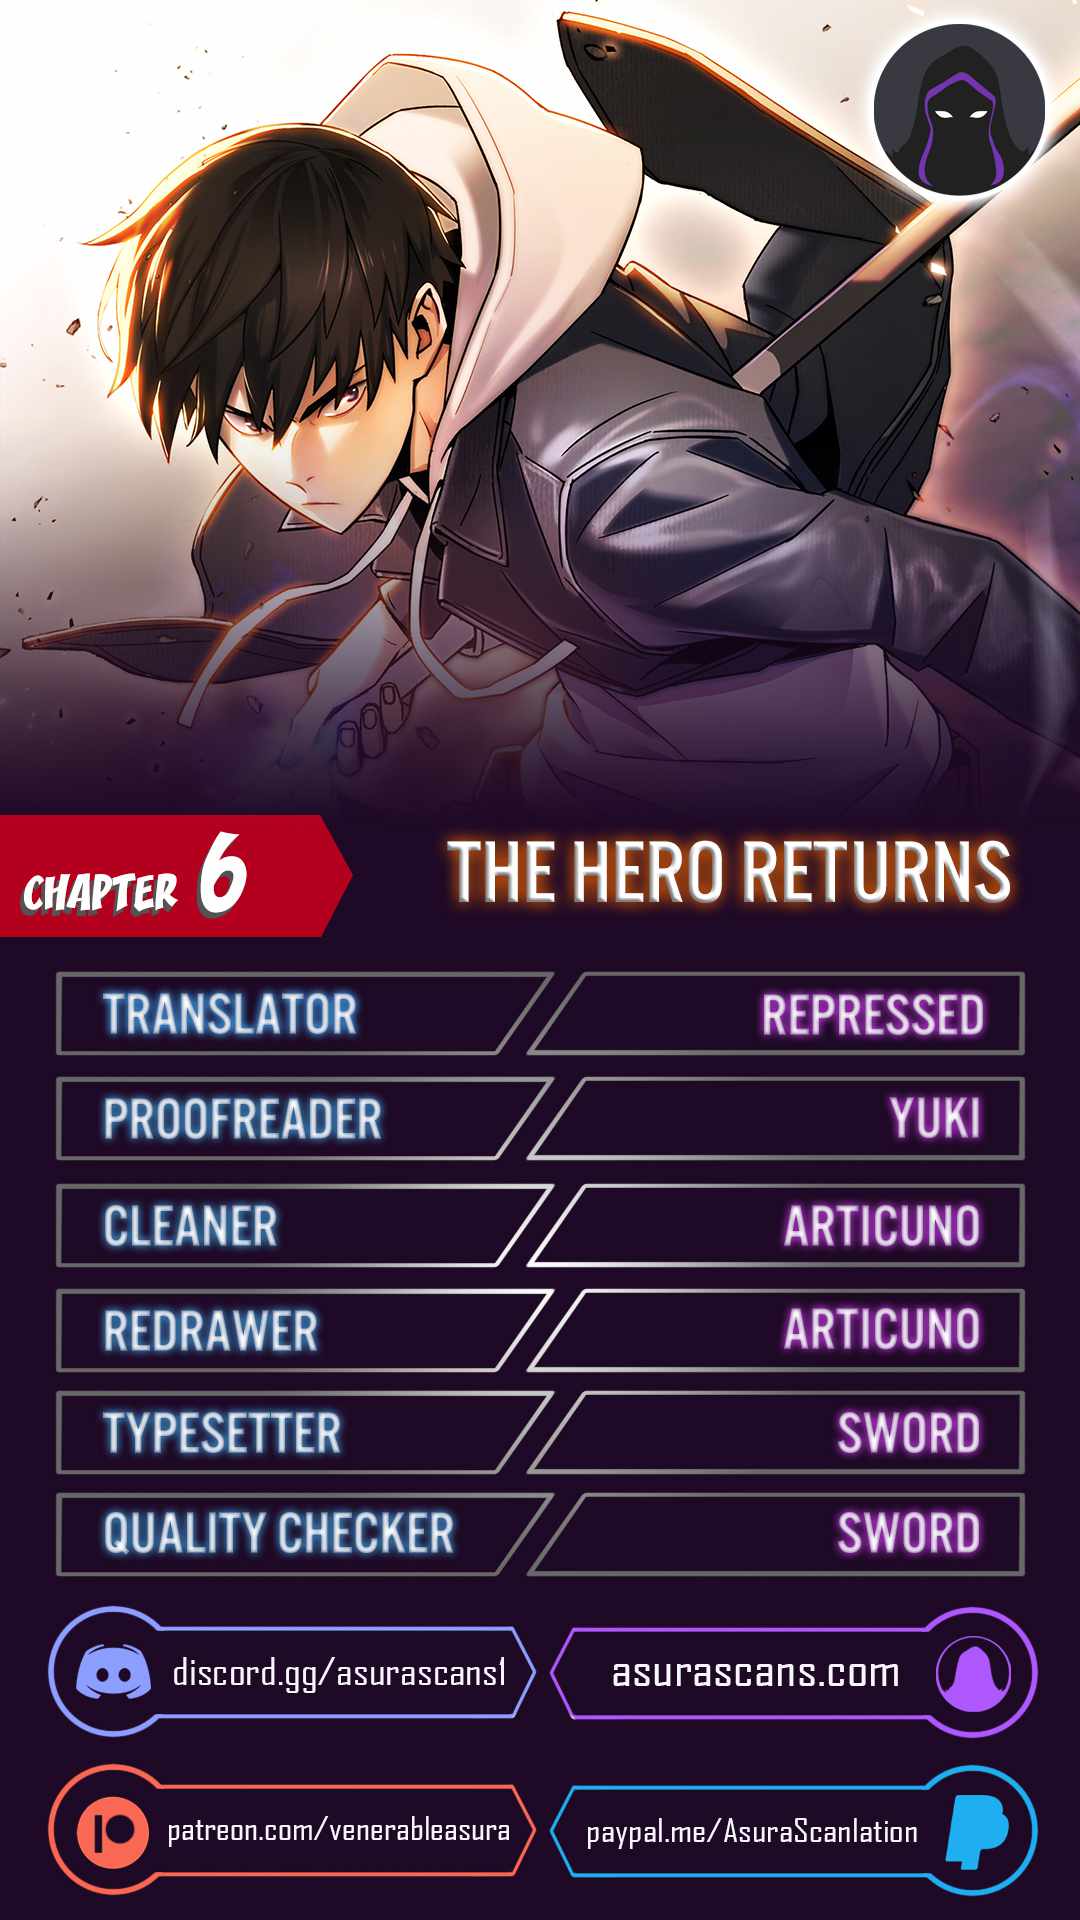 The Hero Returns chapter 6